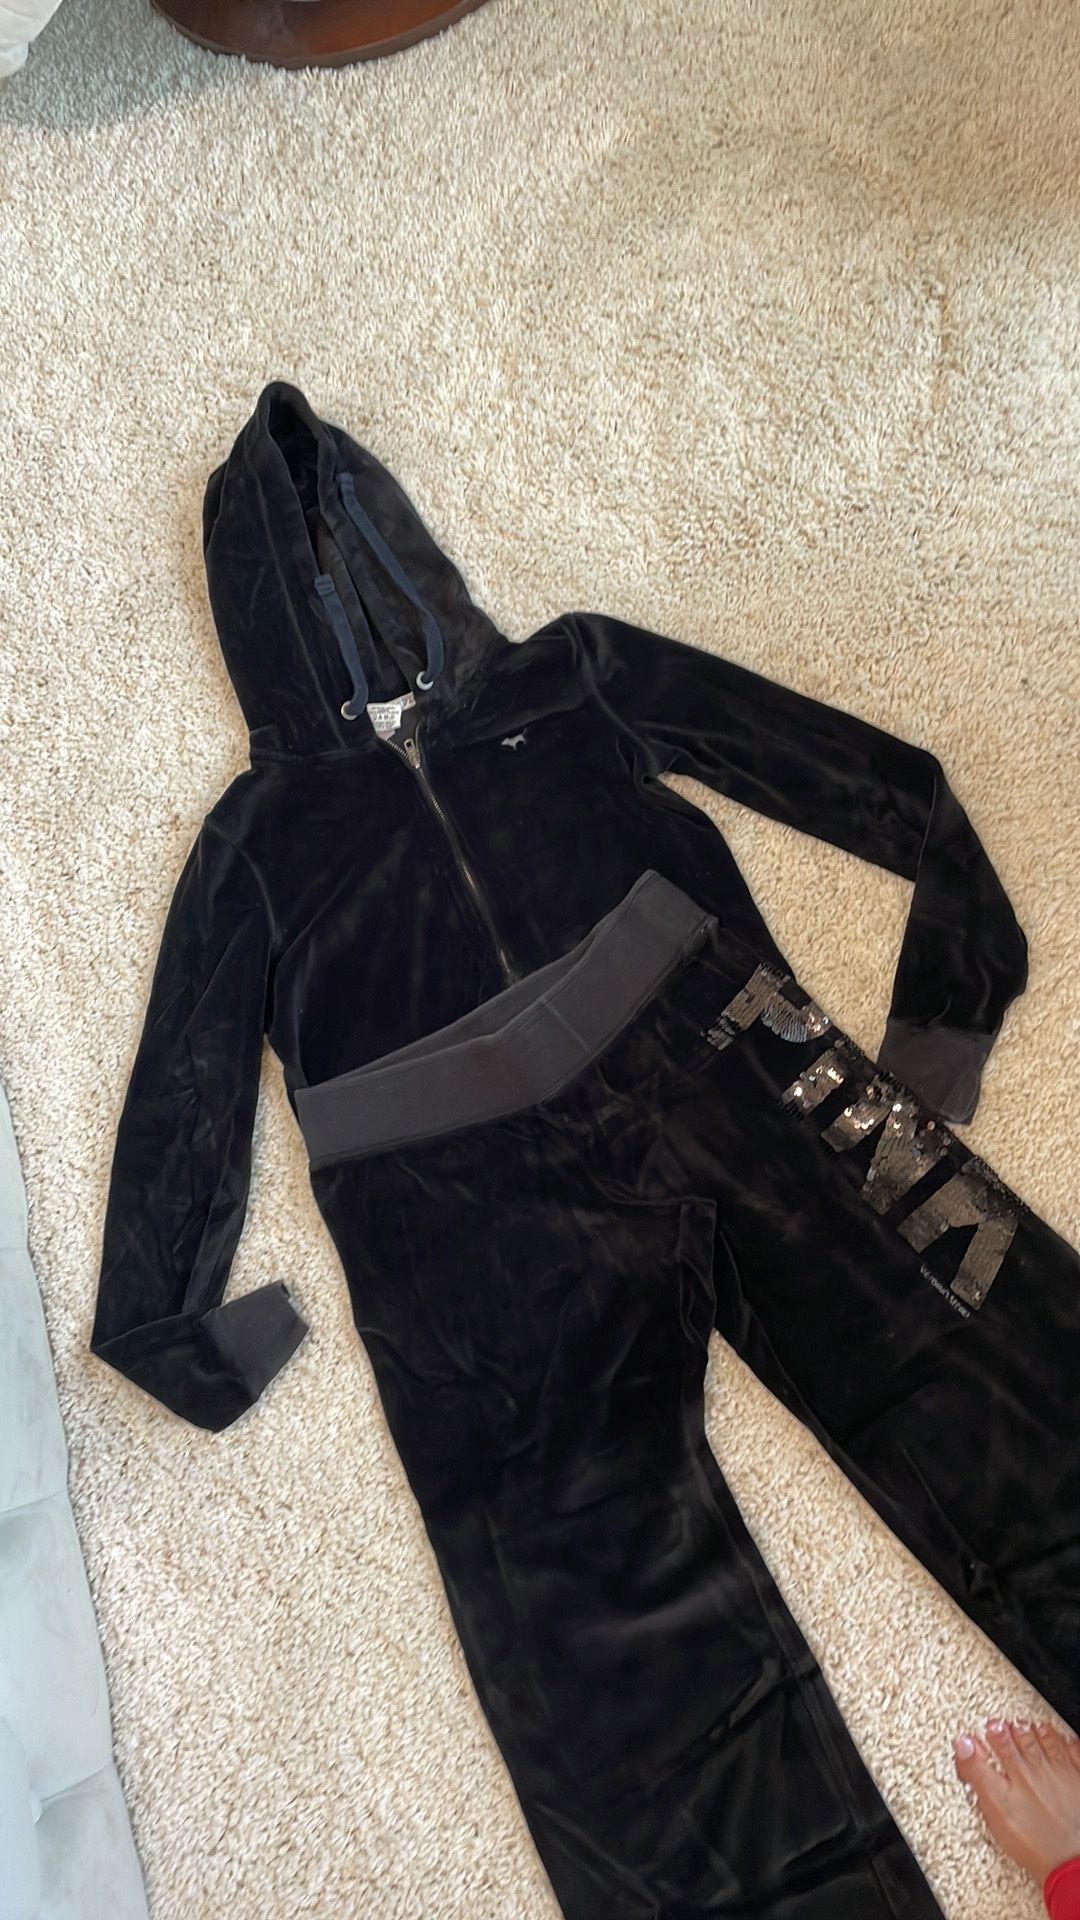 Victoria’s Secret pink black velour hoodie set size small. Perfect condition track suit sequin